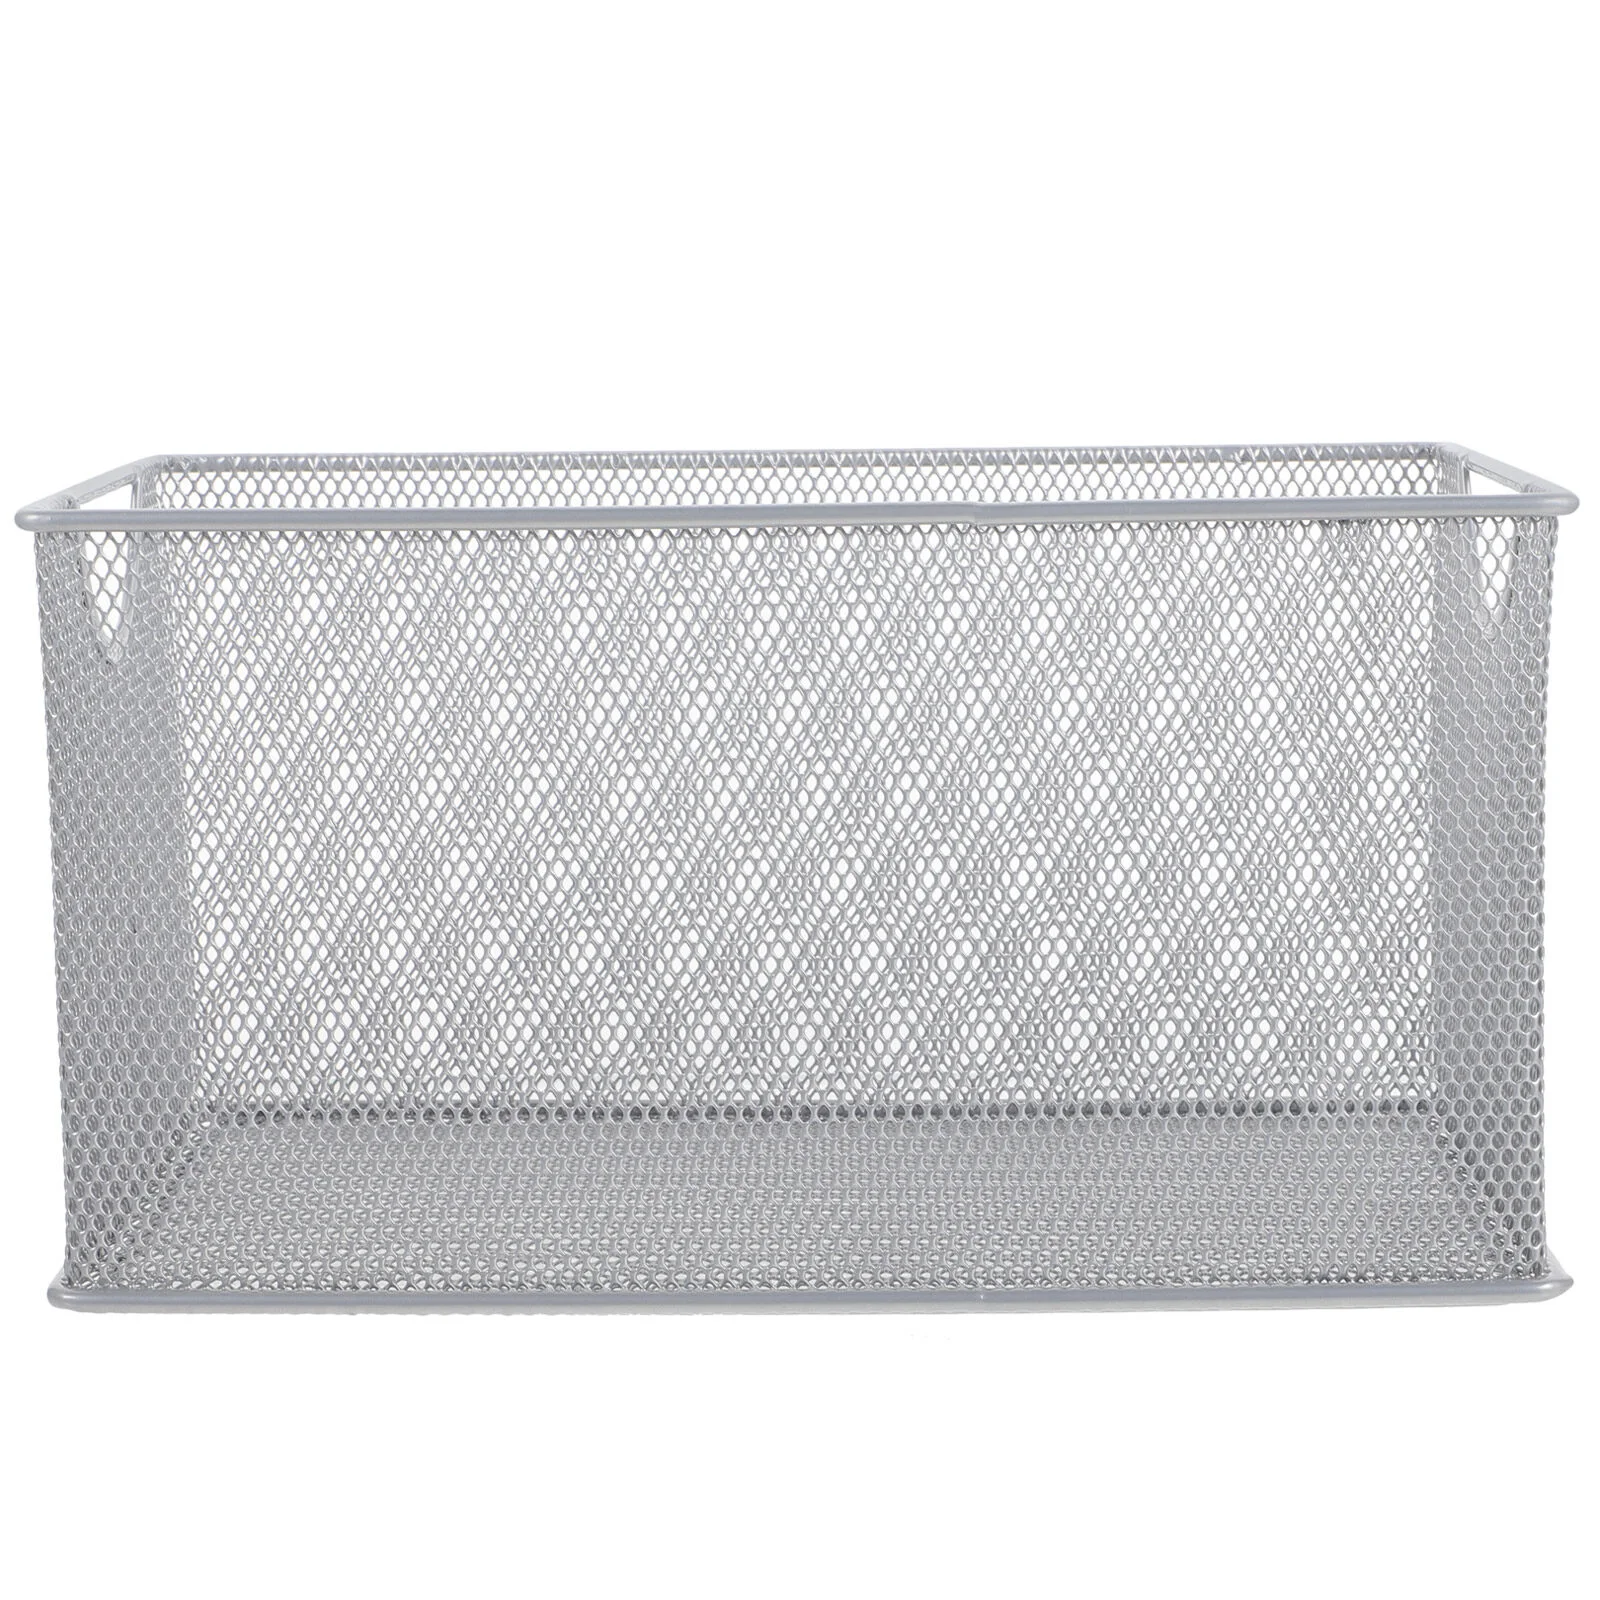 

Narrow Storage Box Board Basket Bins Clothing Superimposed Wire Metal Decorative Home Baskets